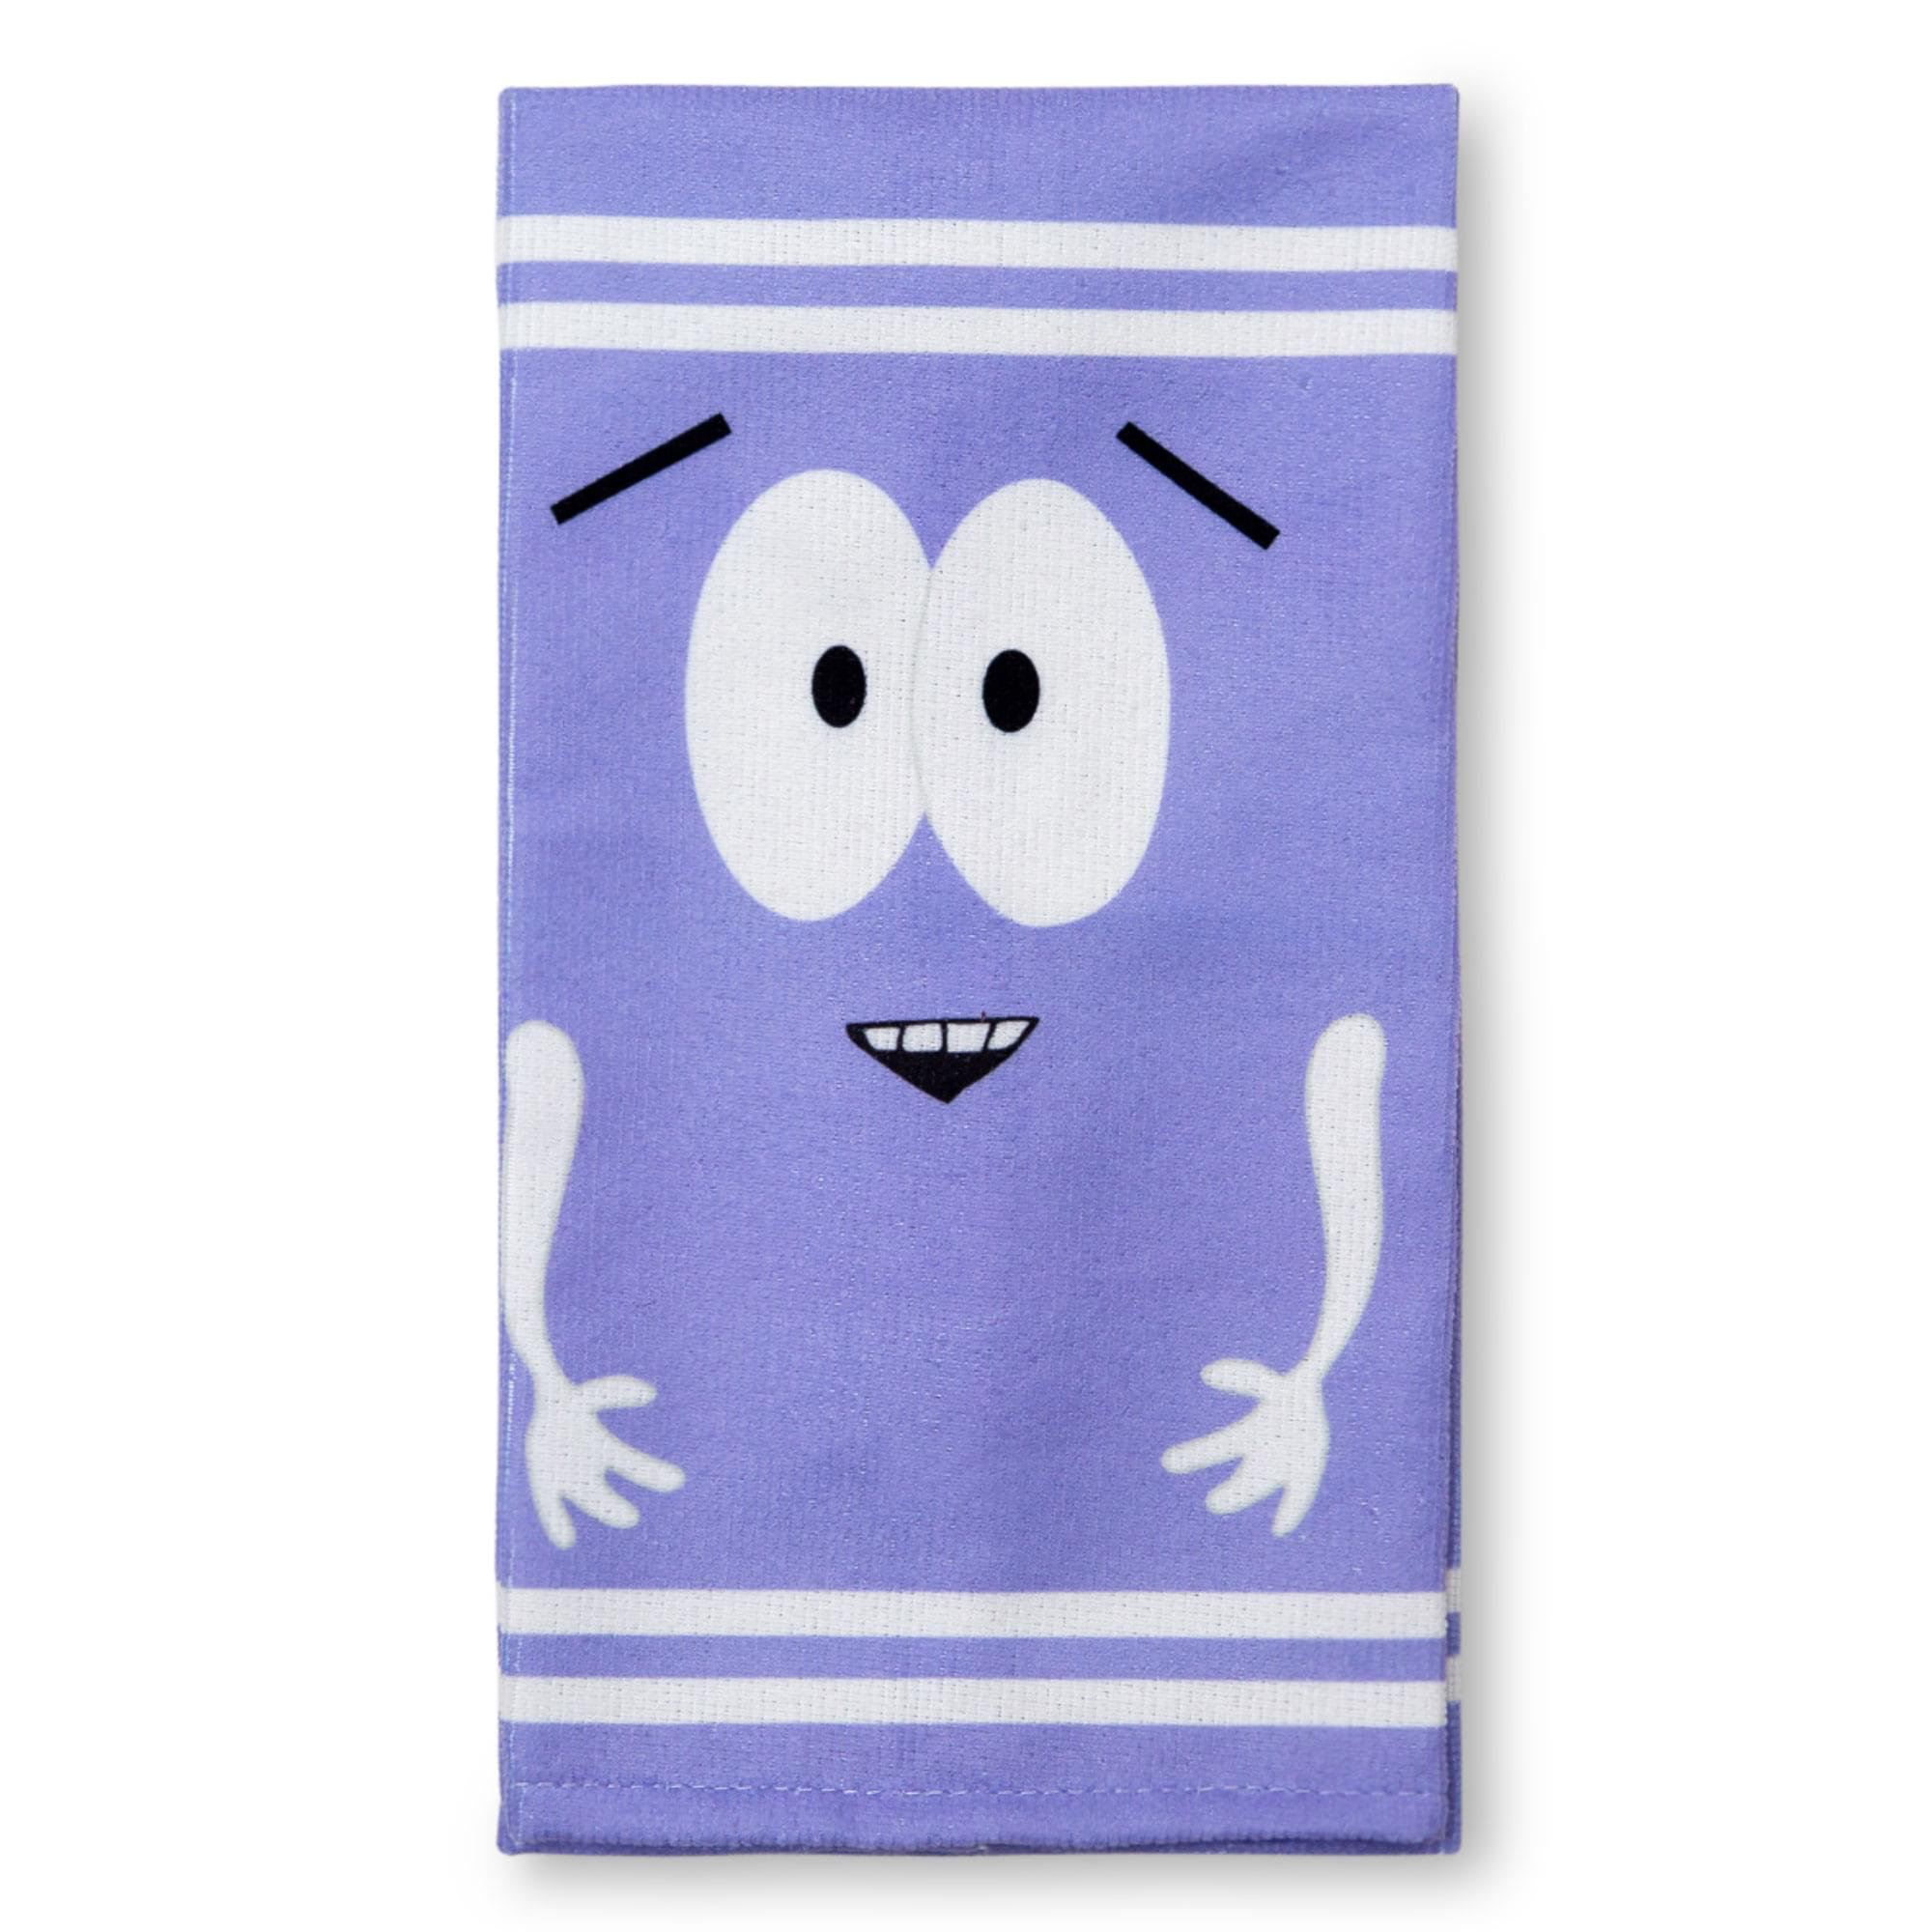 Surreal Entertainment Abstract Ripple Tea Towel